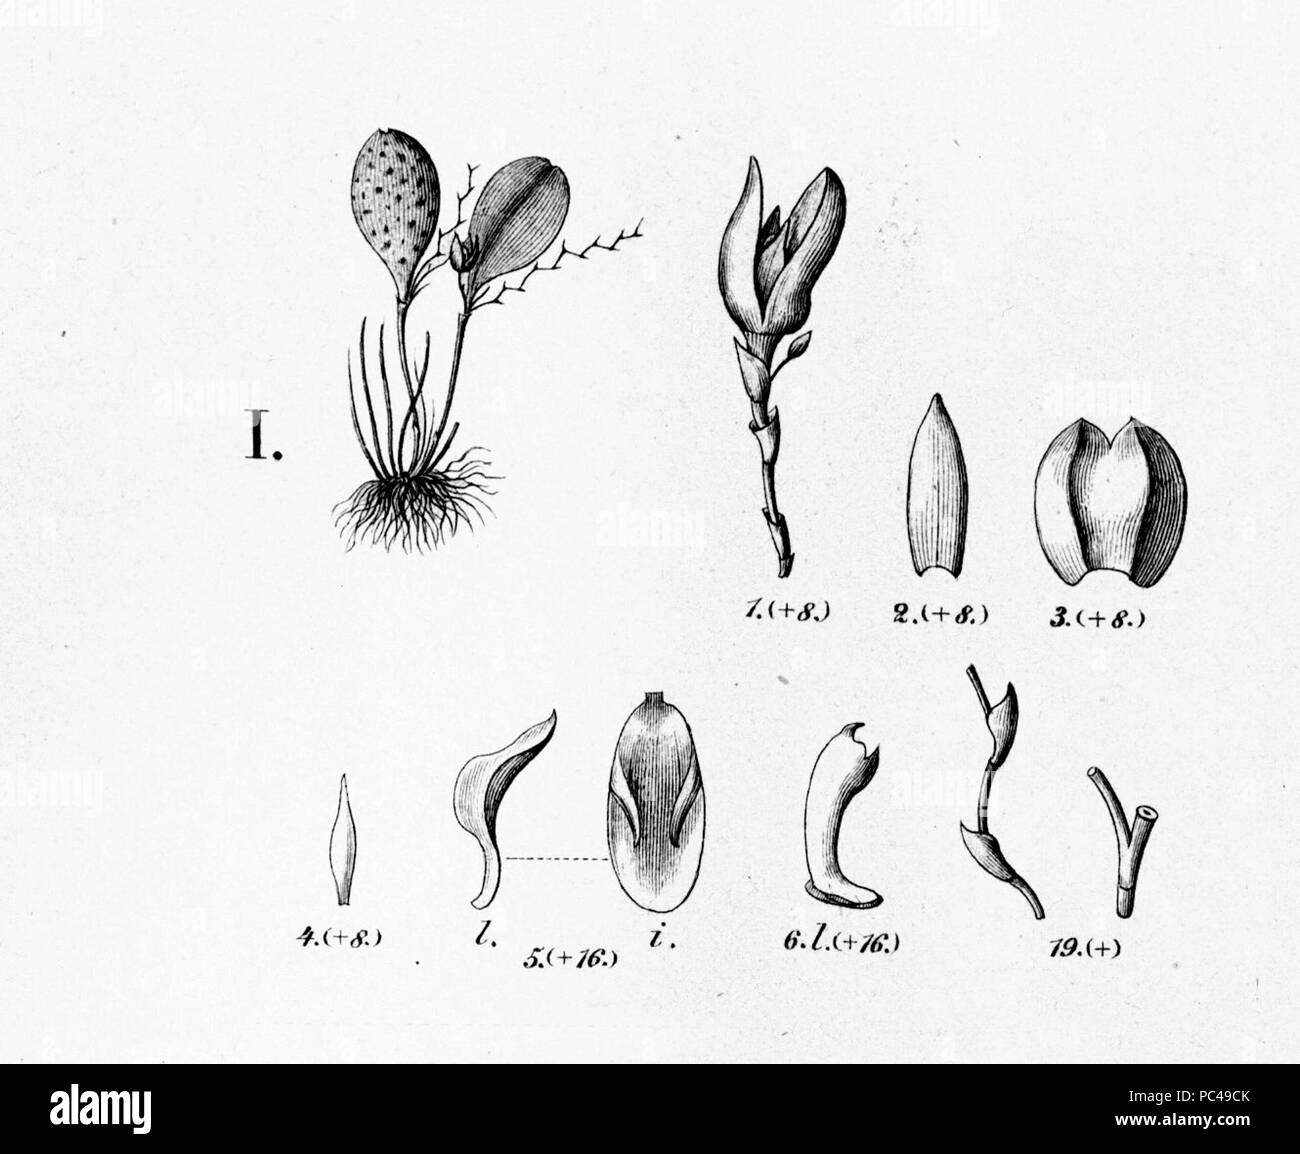 25 Acianthera serpentula (as Pleurothallis punctata) - cutout from Fl.Br.3-4-92 Stock Photo